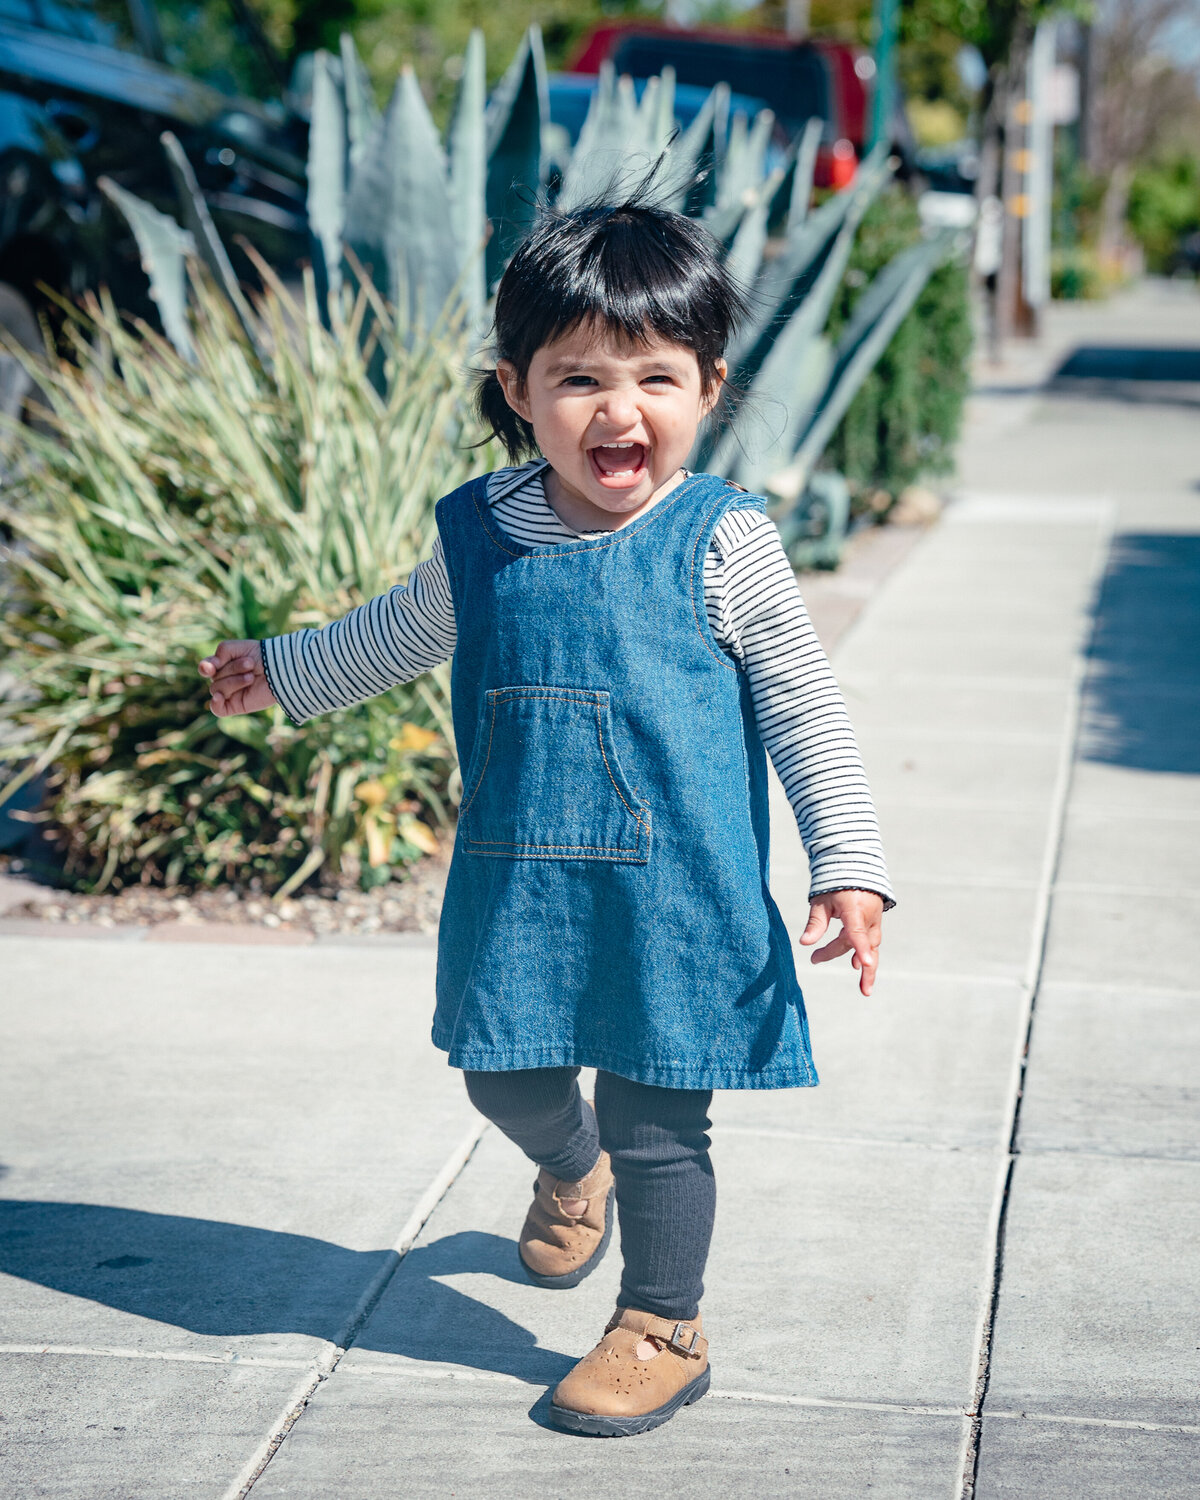 Toddler smiles as she walks down the street